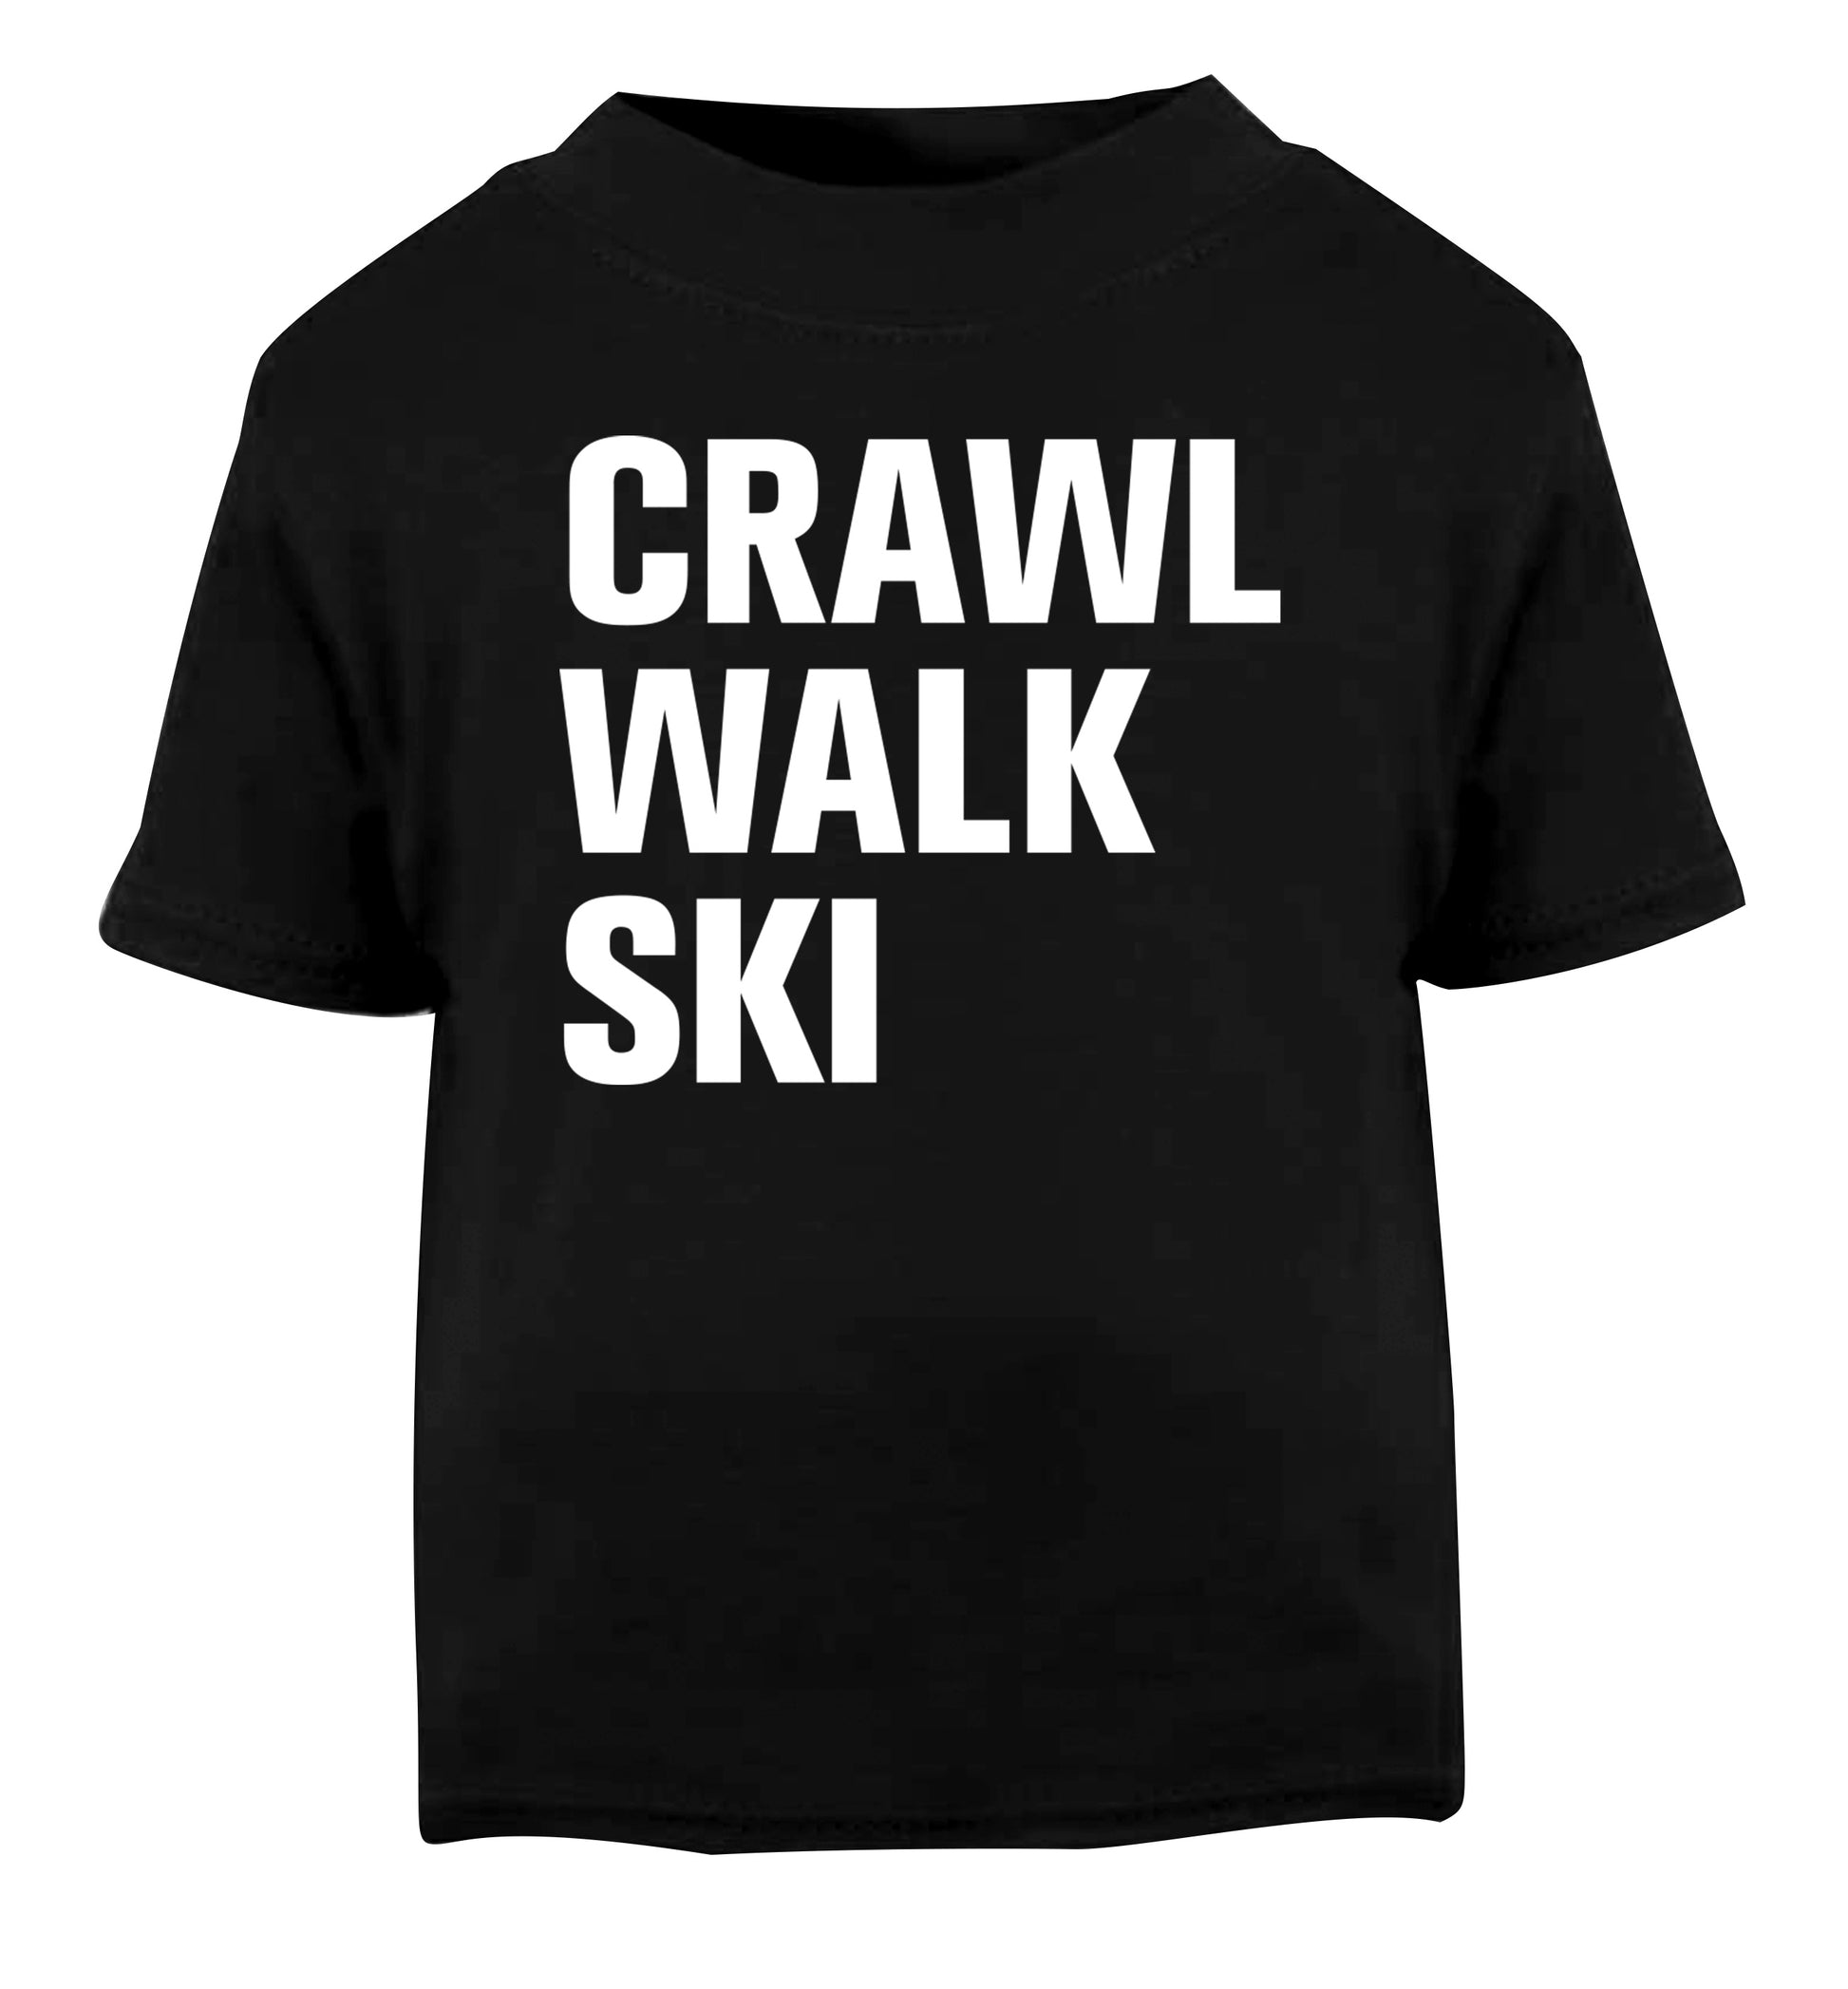 Crawl walk ski Black Baby Toddler Tshirt 2 years